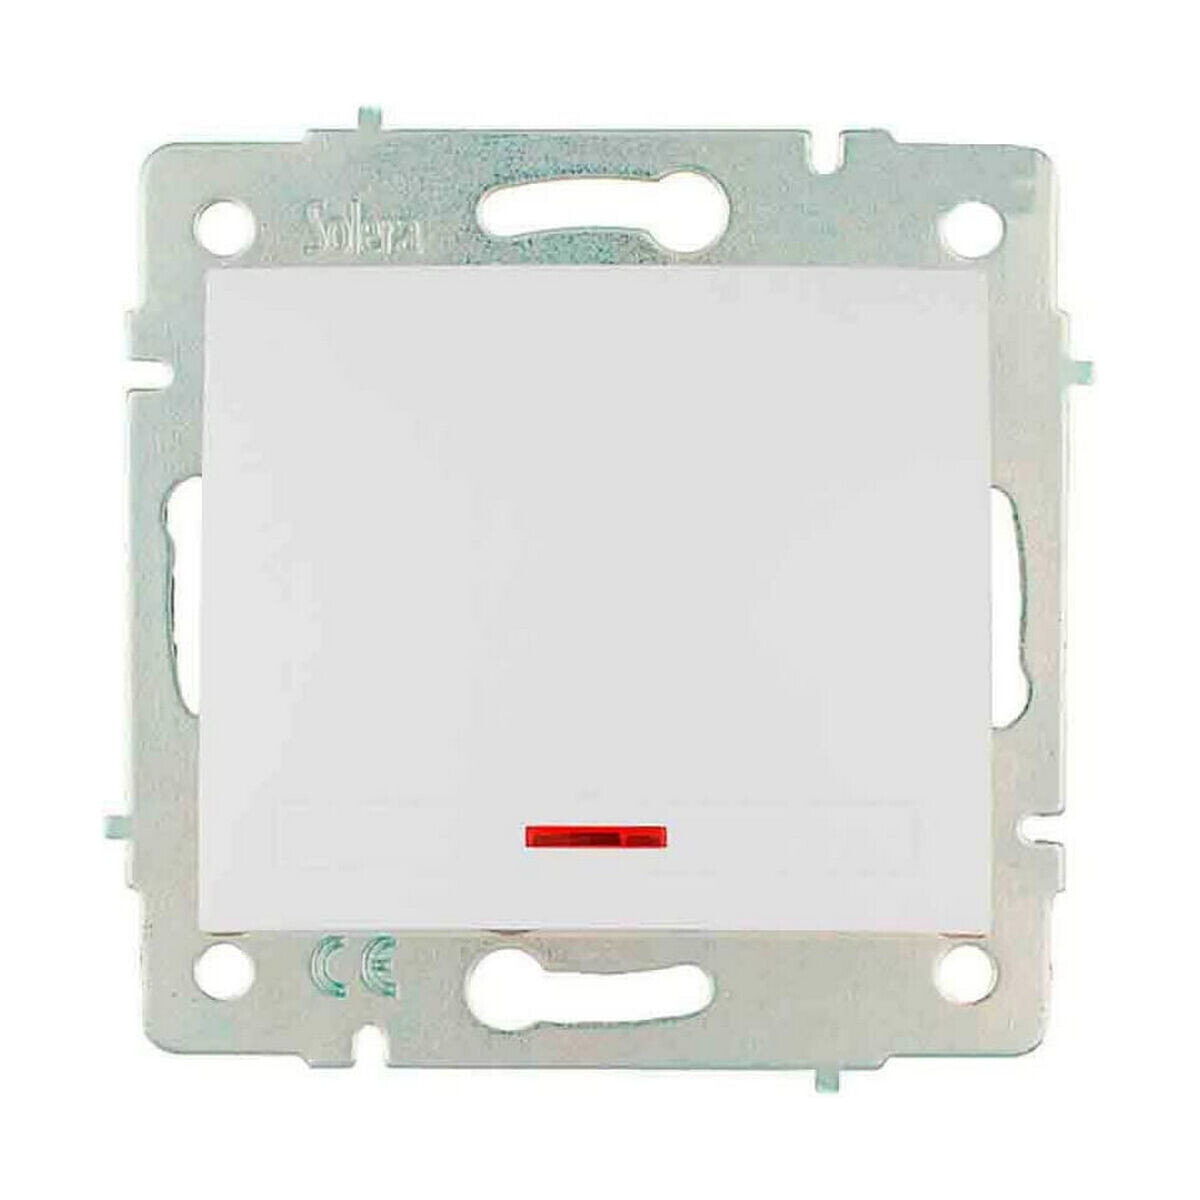 Switch Solera erp02ilqc 8,3 x 8,1 cm